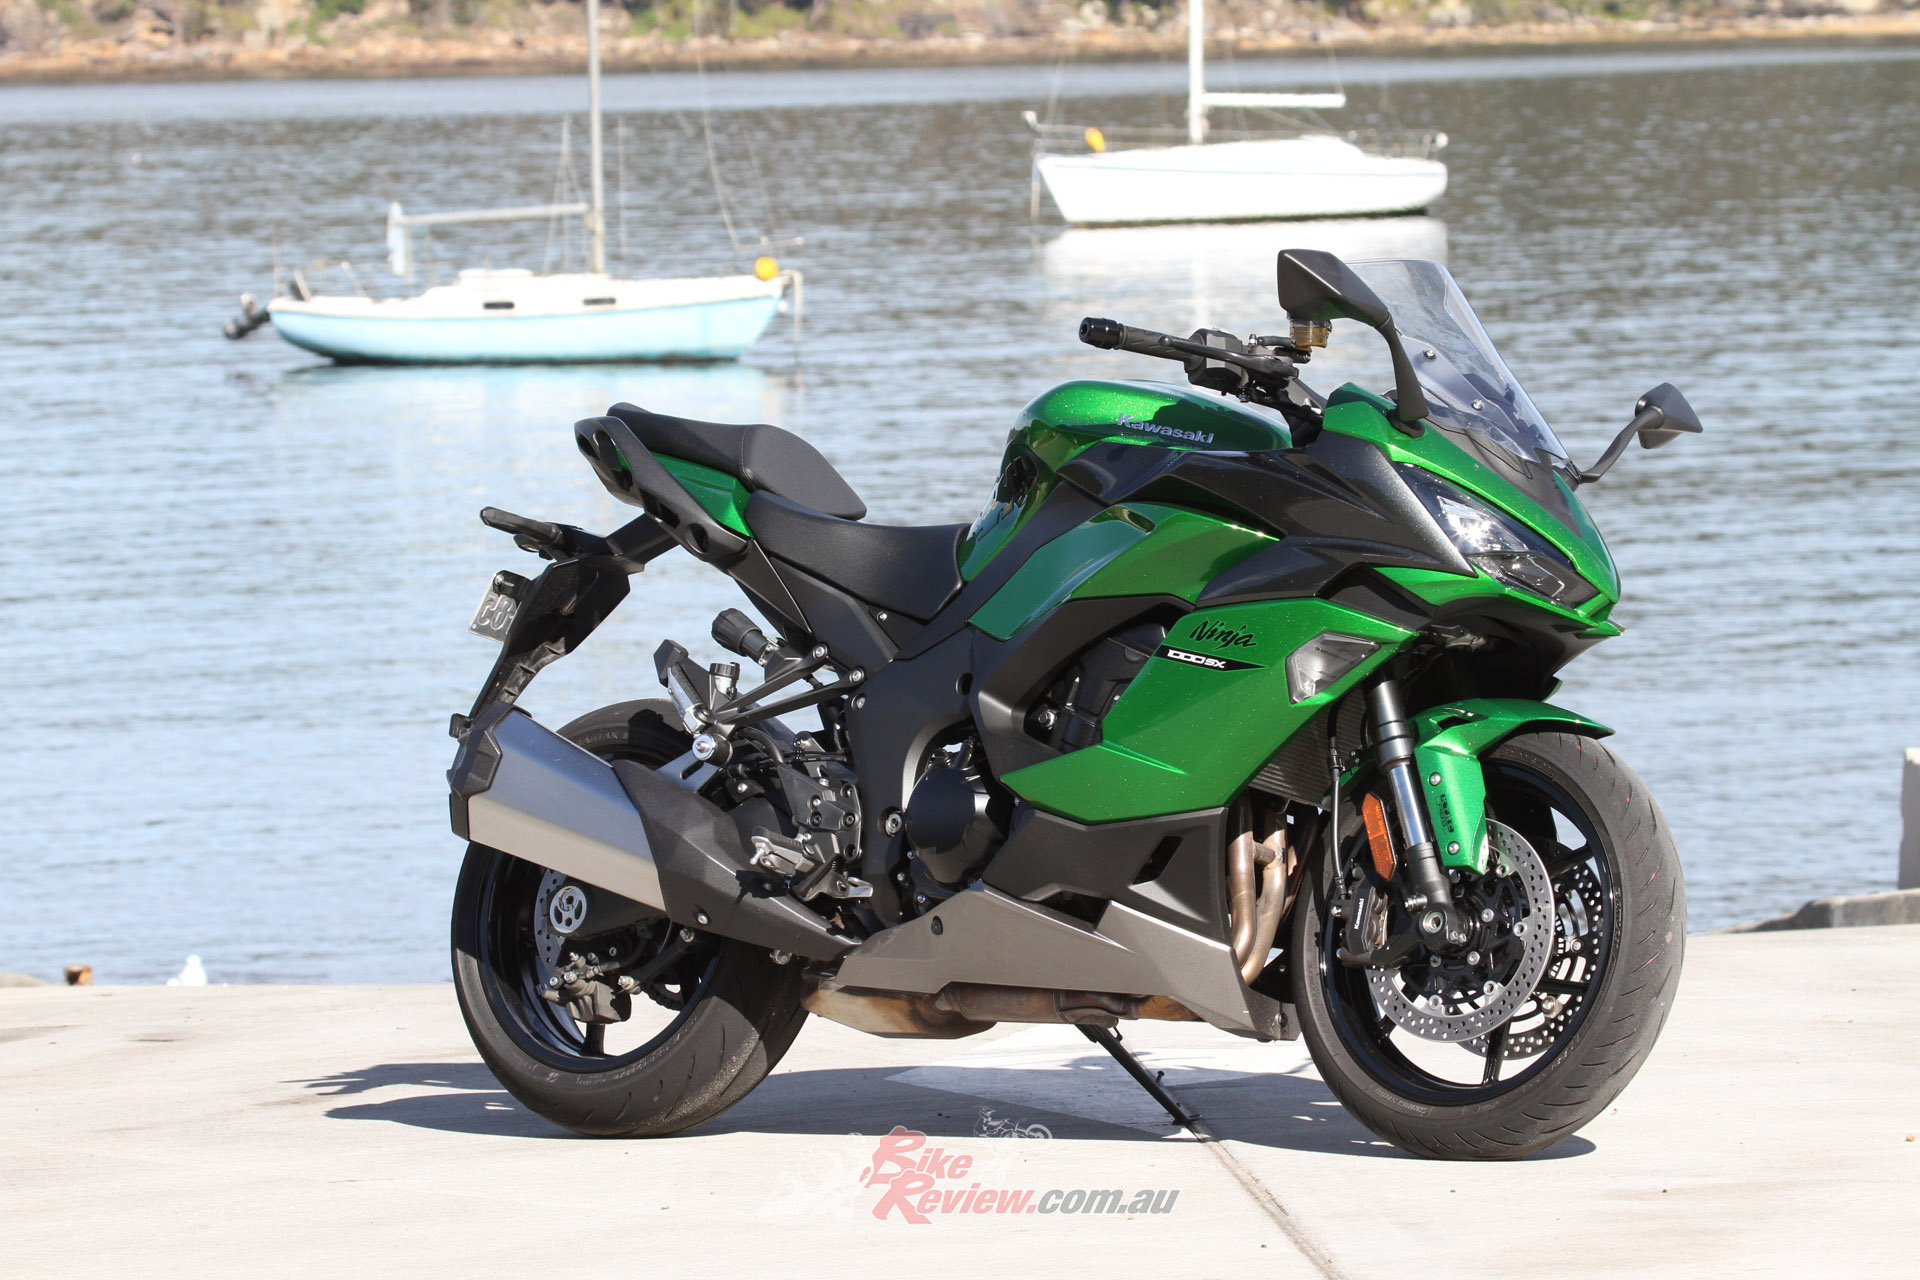 https://bikereview.com.au/wp-content/uploads/2020/10/Bikereview-2020-Kawasaki-Ninja-1000-04.jpg